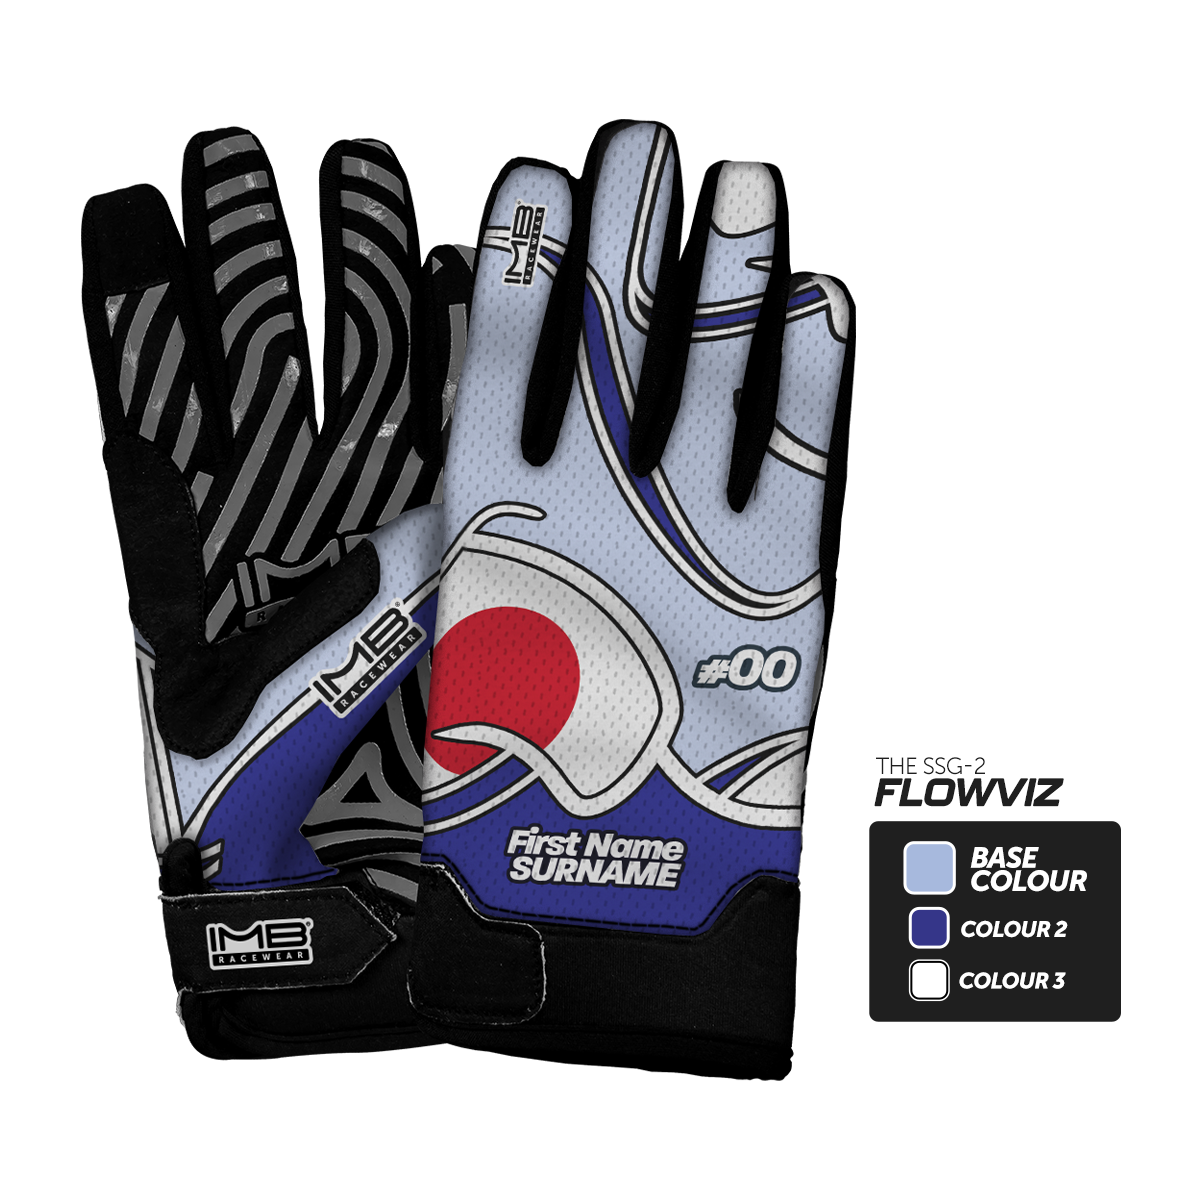 The Flowviz SSG-2 Short Sim Racing Gloves